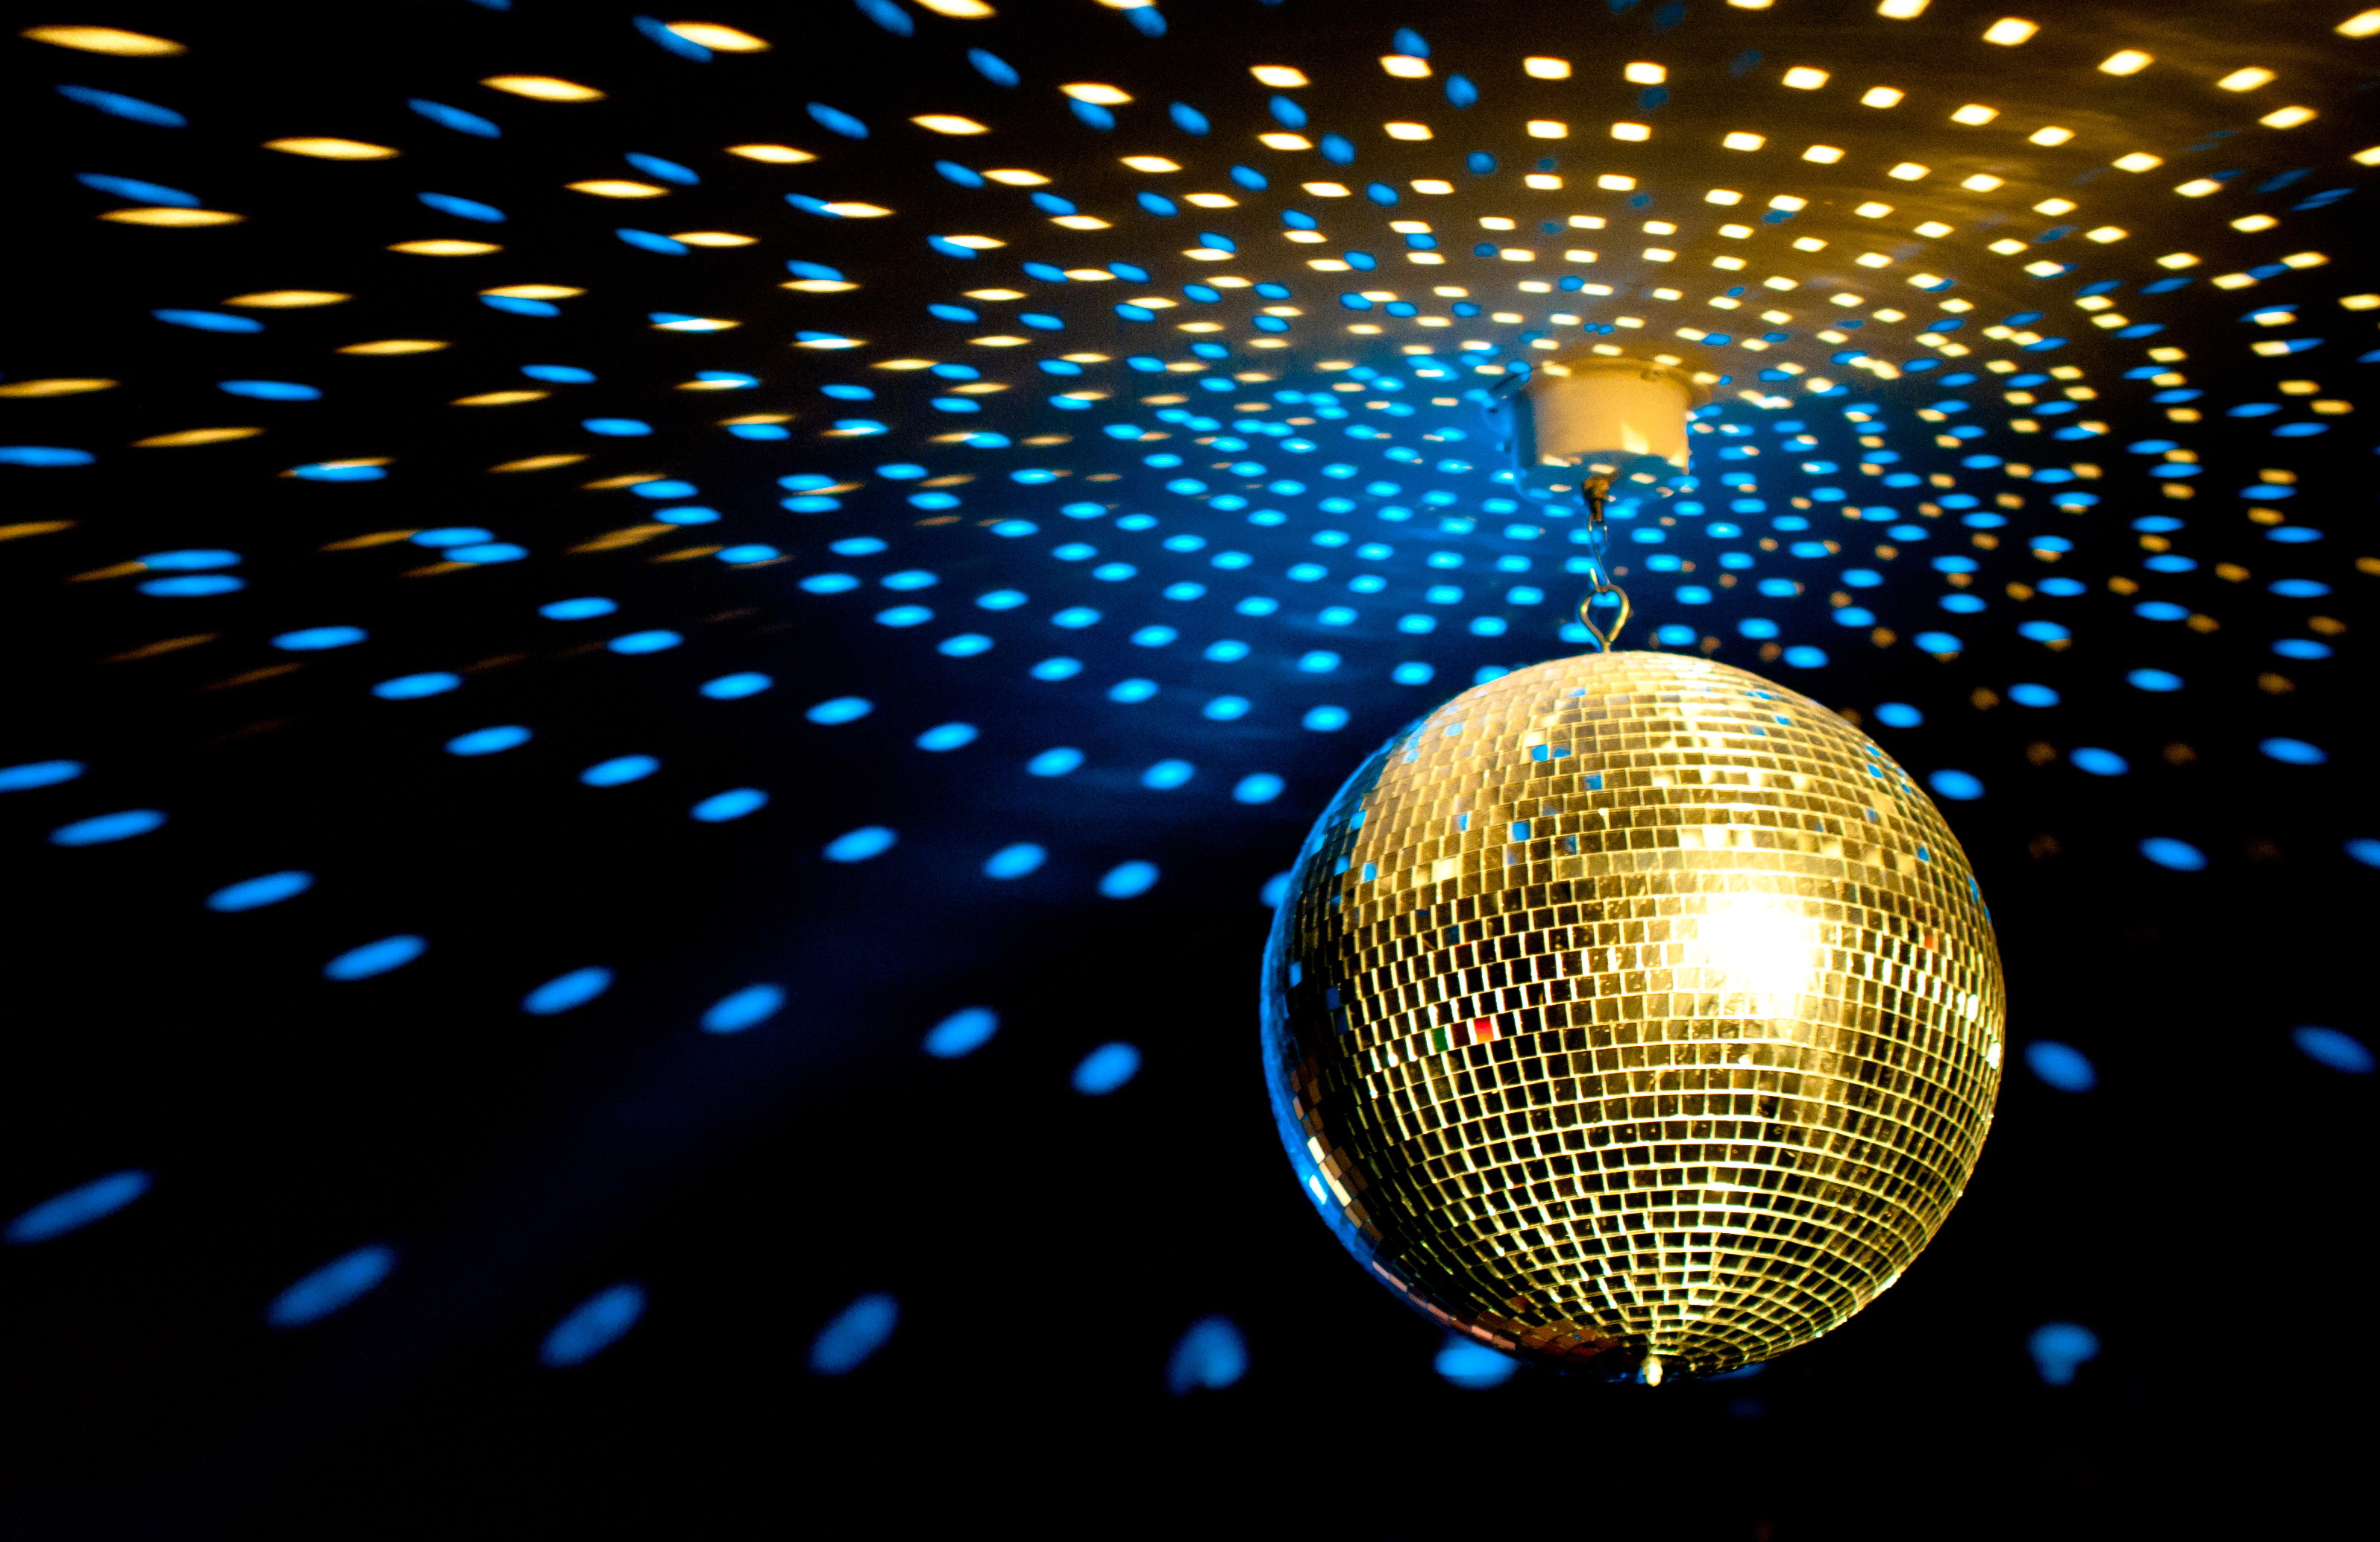  club music wallpapers 24 disco ball wallpaper 62459html January 2012